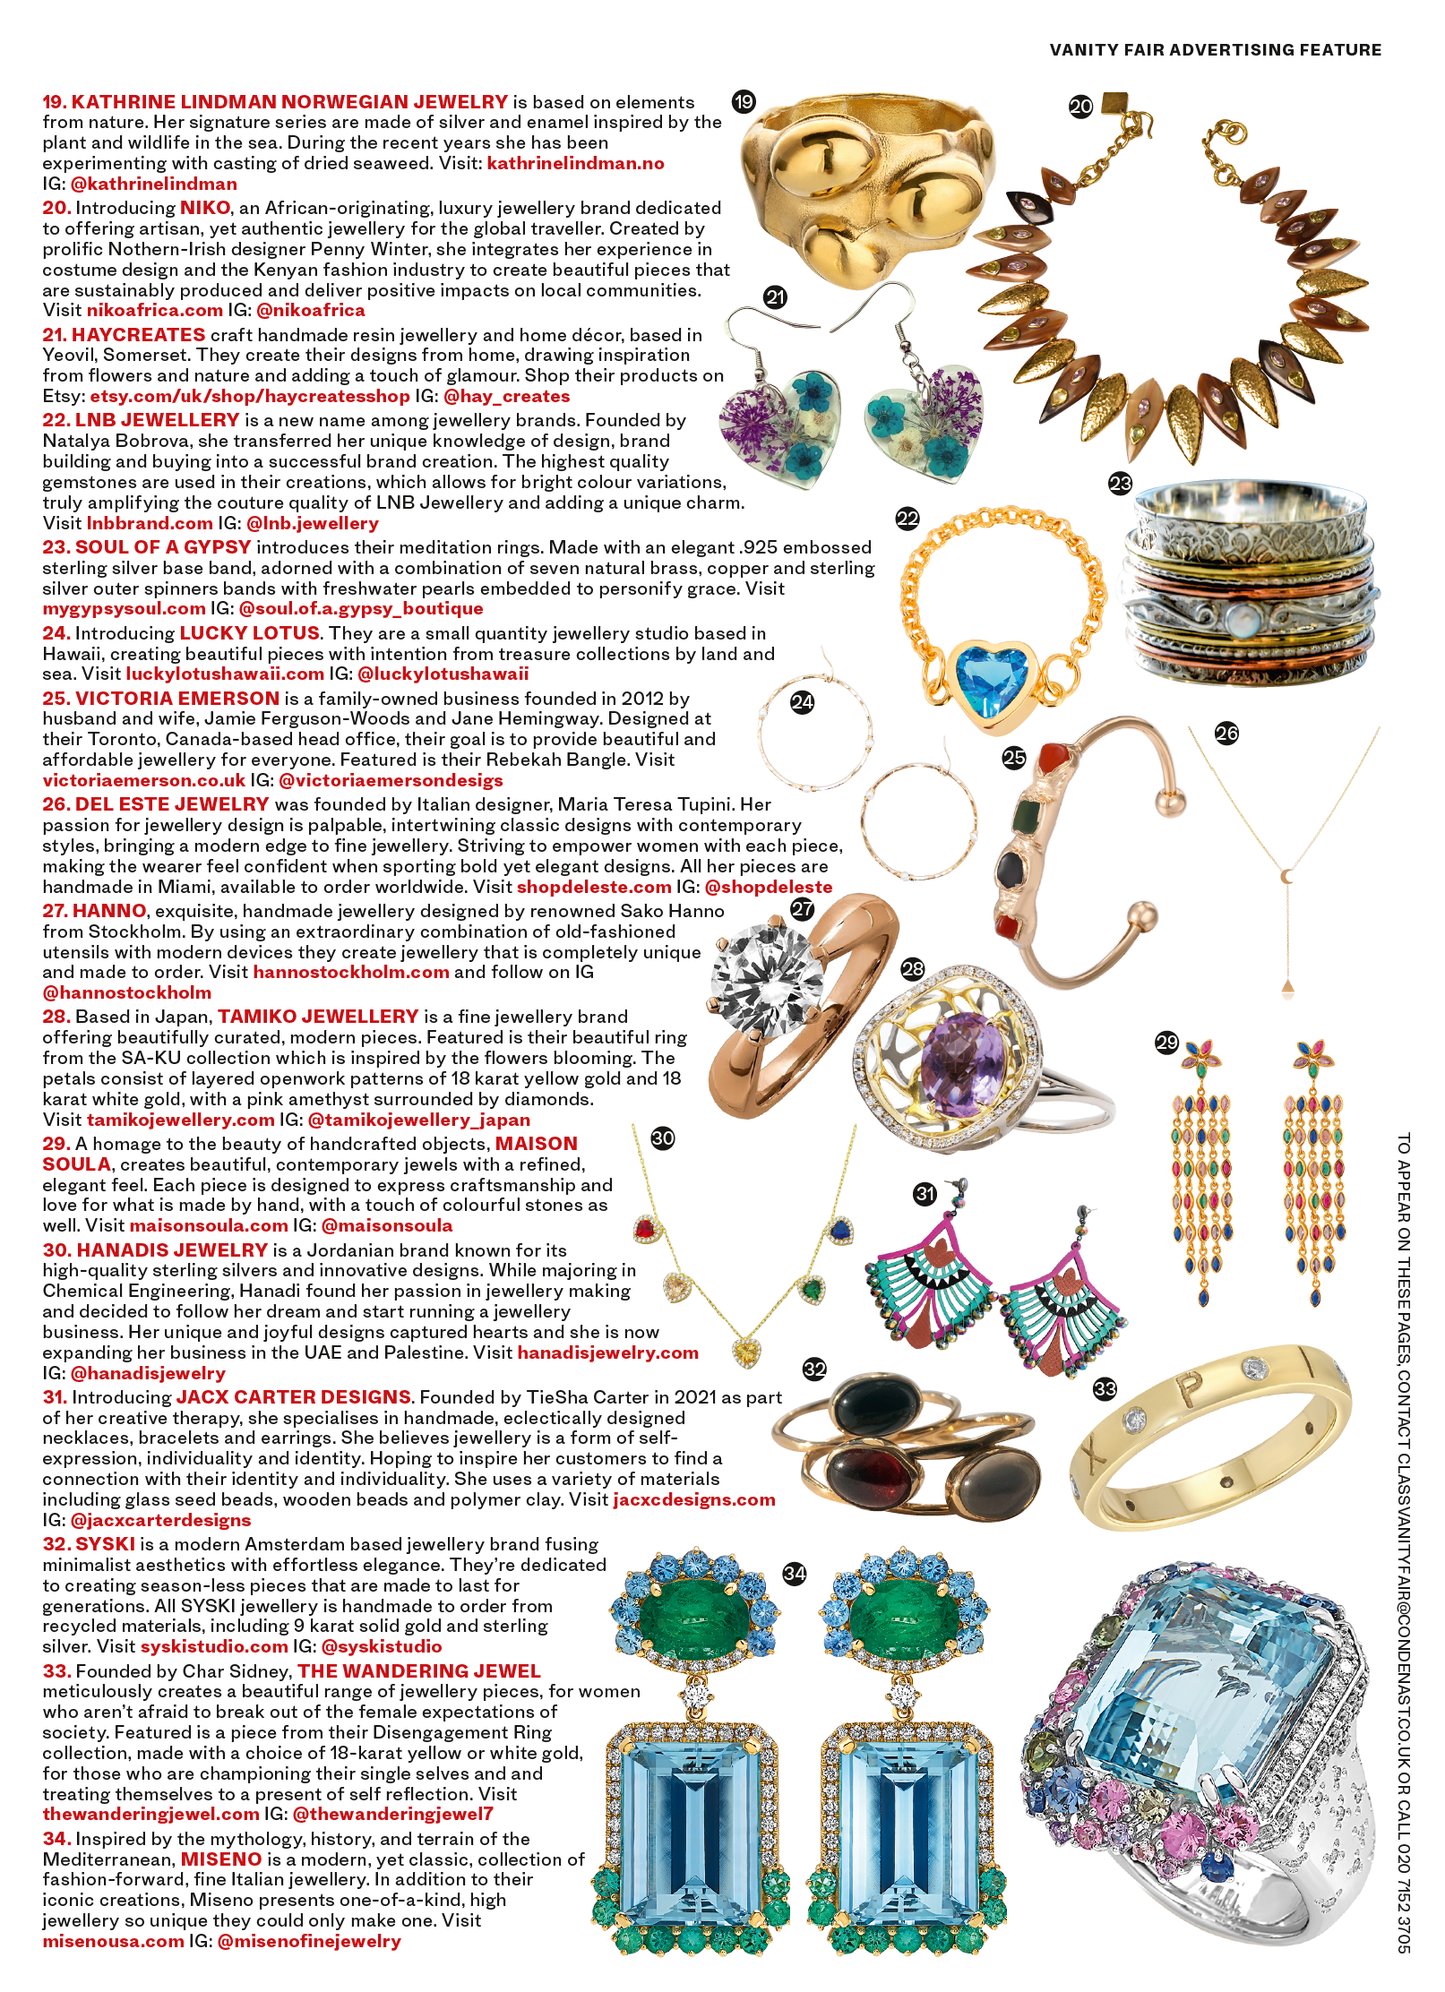 Vanity Fair magazine featuring the 7 diamond pillbox ring from the wandering jewel